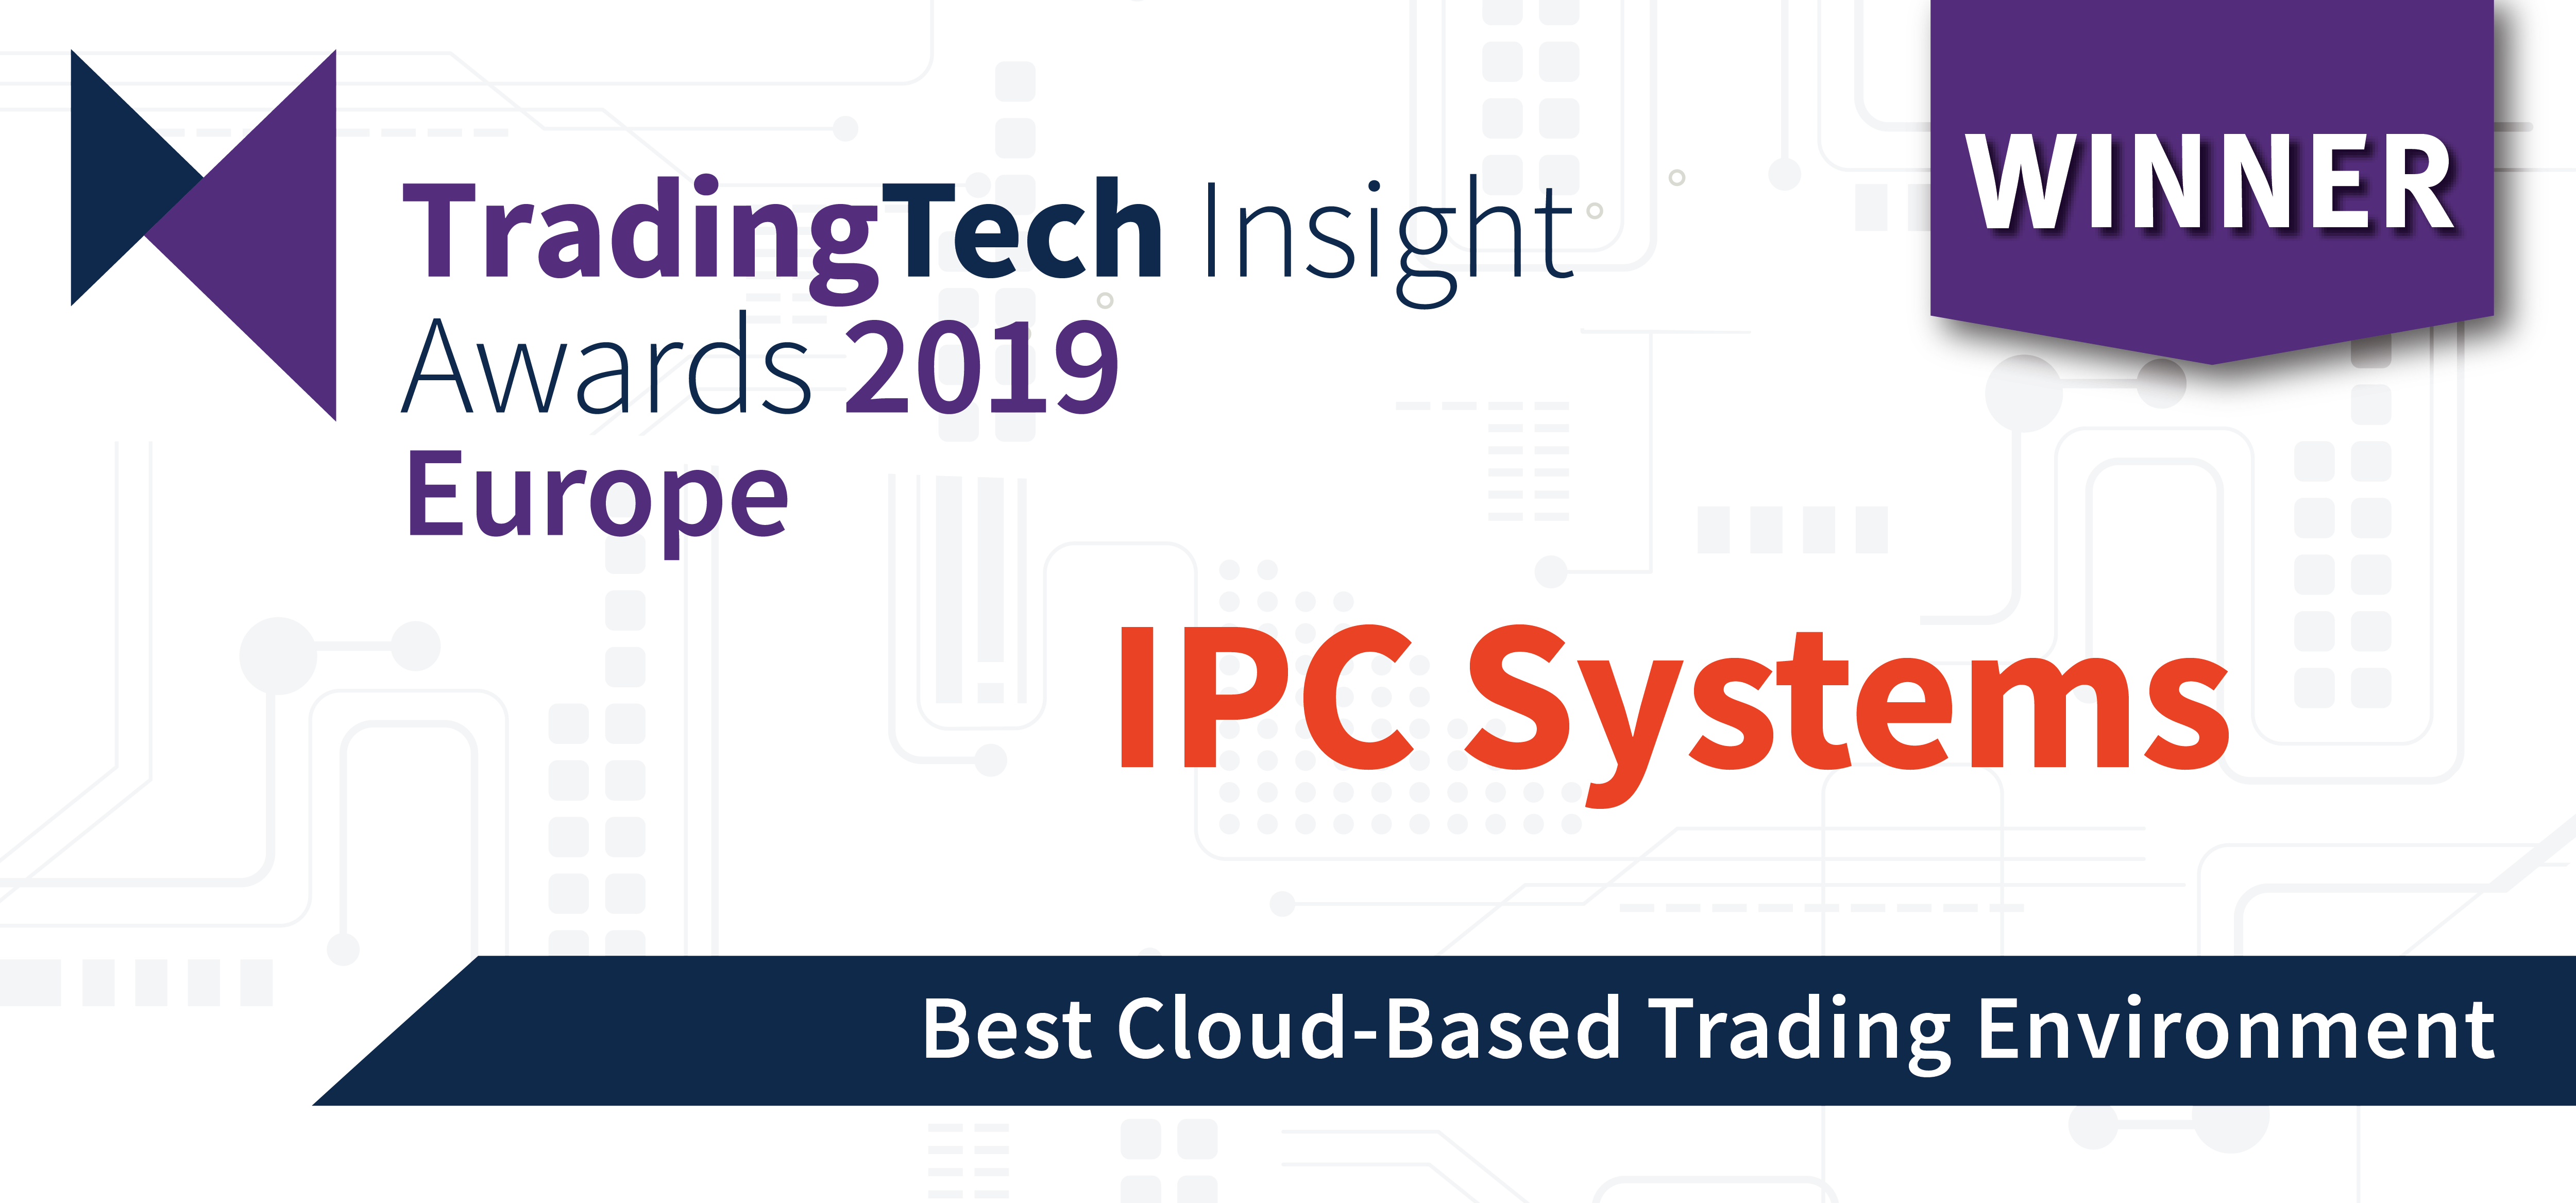 “Best Cloud-Based Trading Environment” – TradingTech Insight Awards Europe 2019